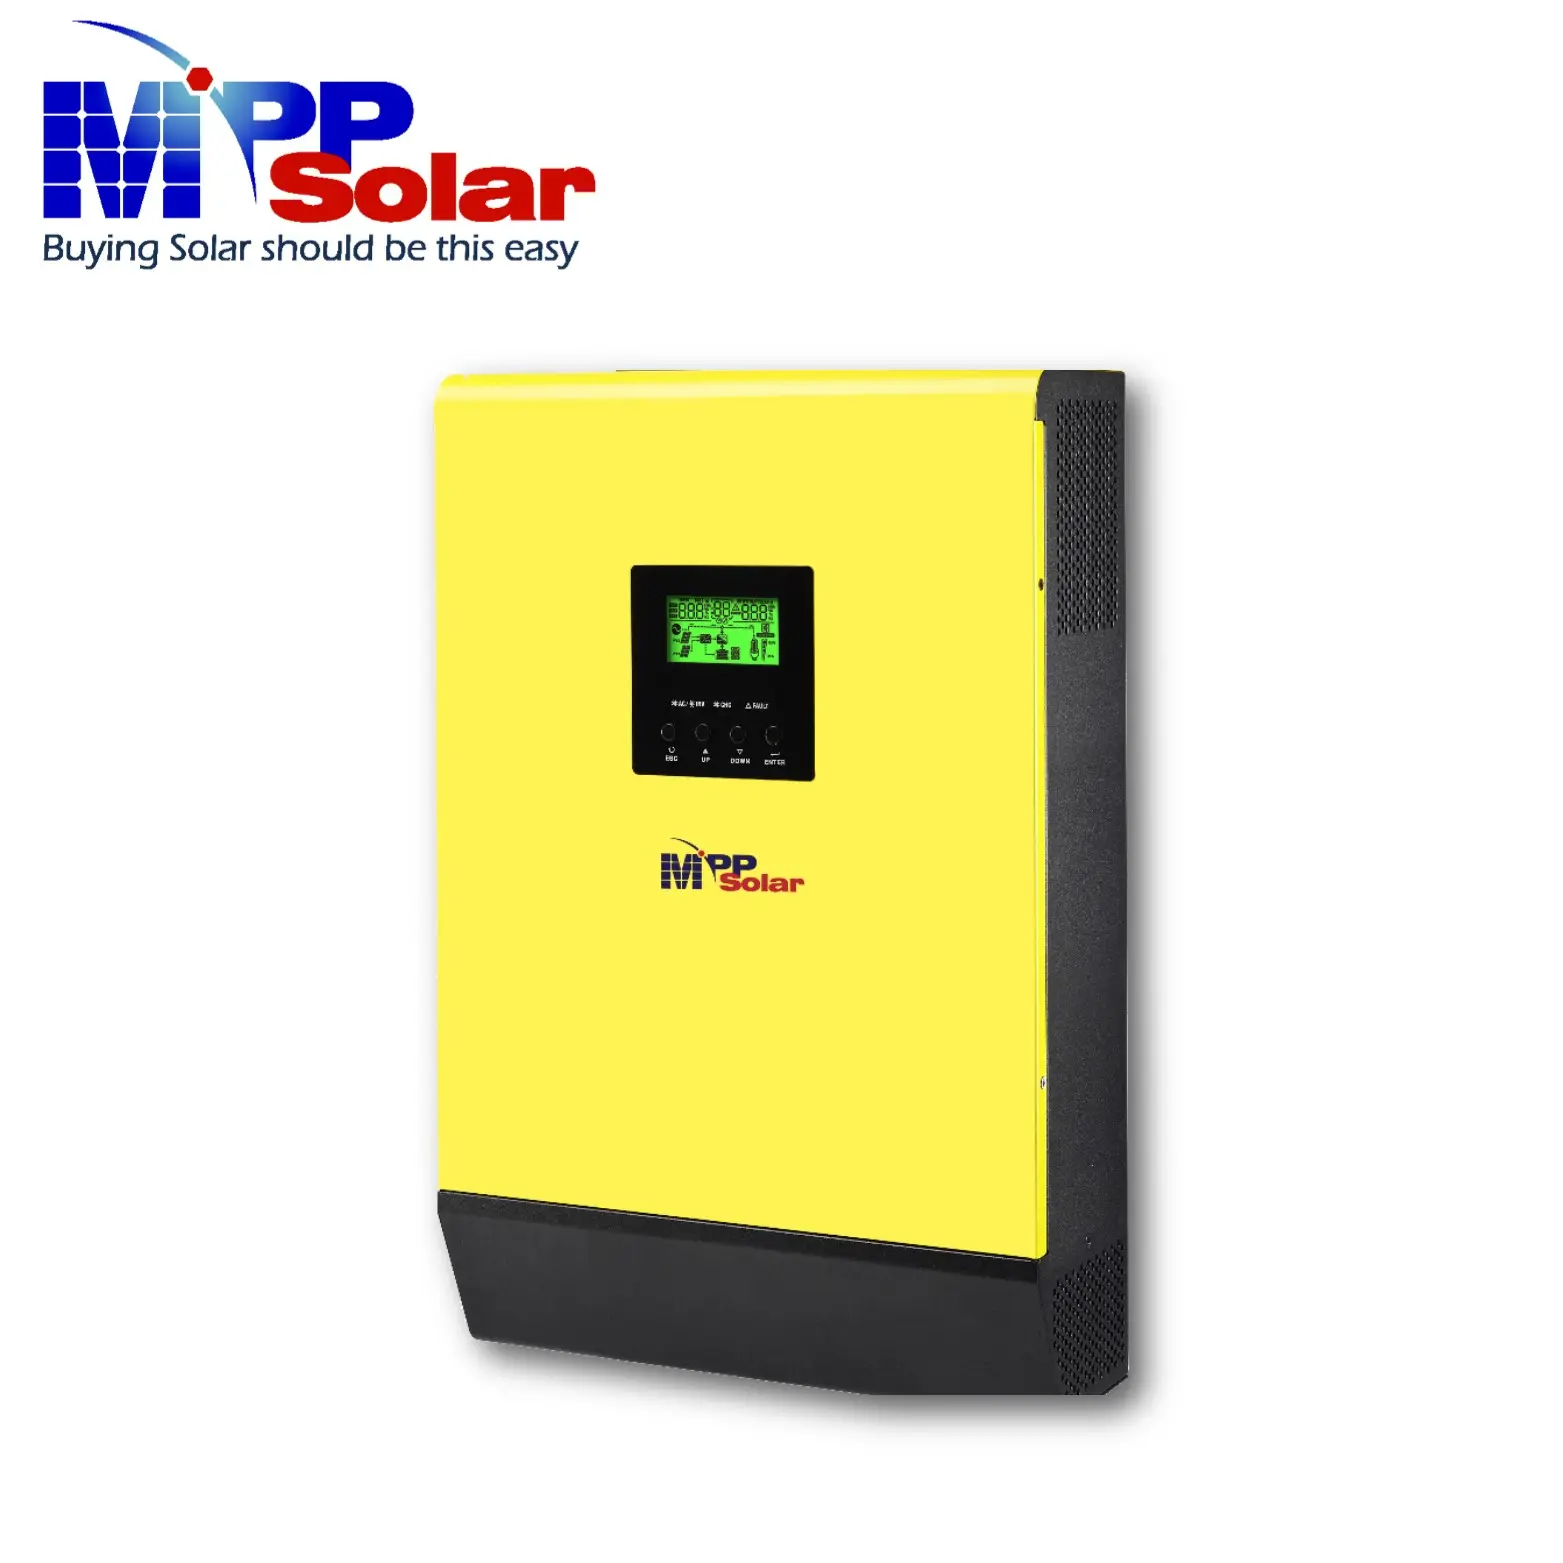 HV V2 6048-T 6000w 48v 230v hybrid MPP Solar inverter mppt charger high PV 500v grid tied Dual AC output Max Charging 120a